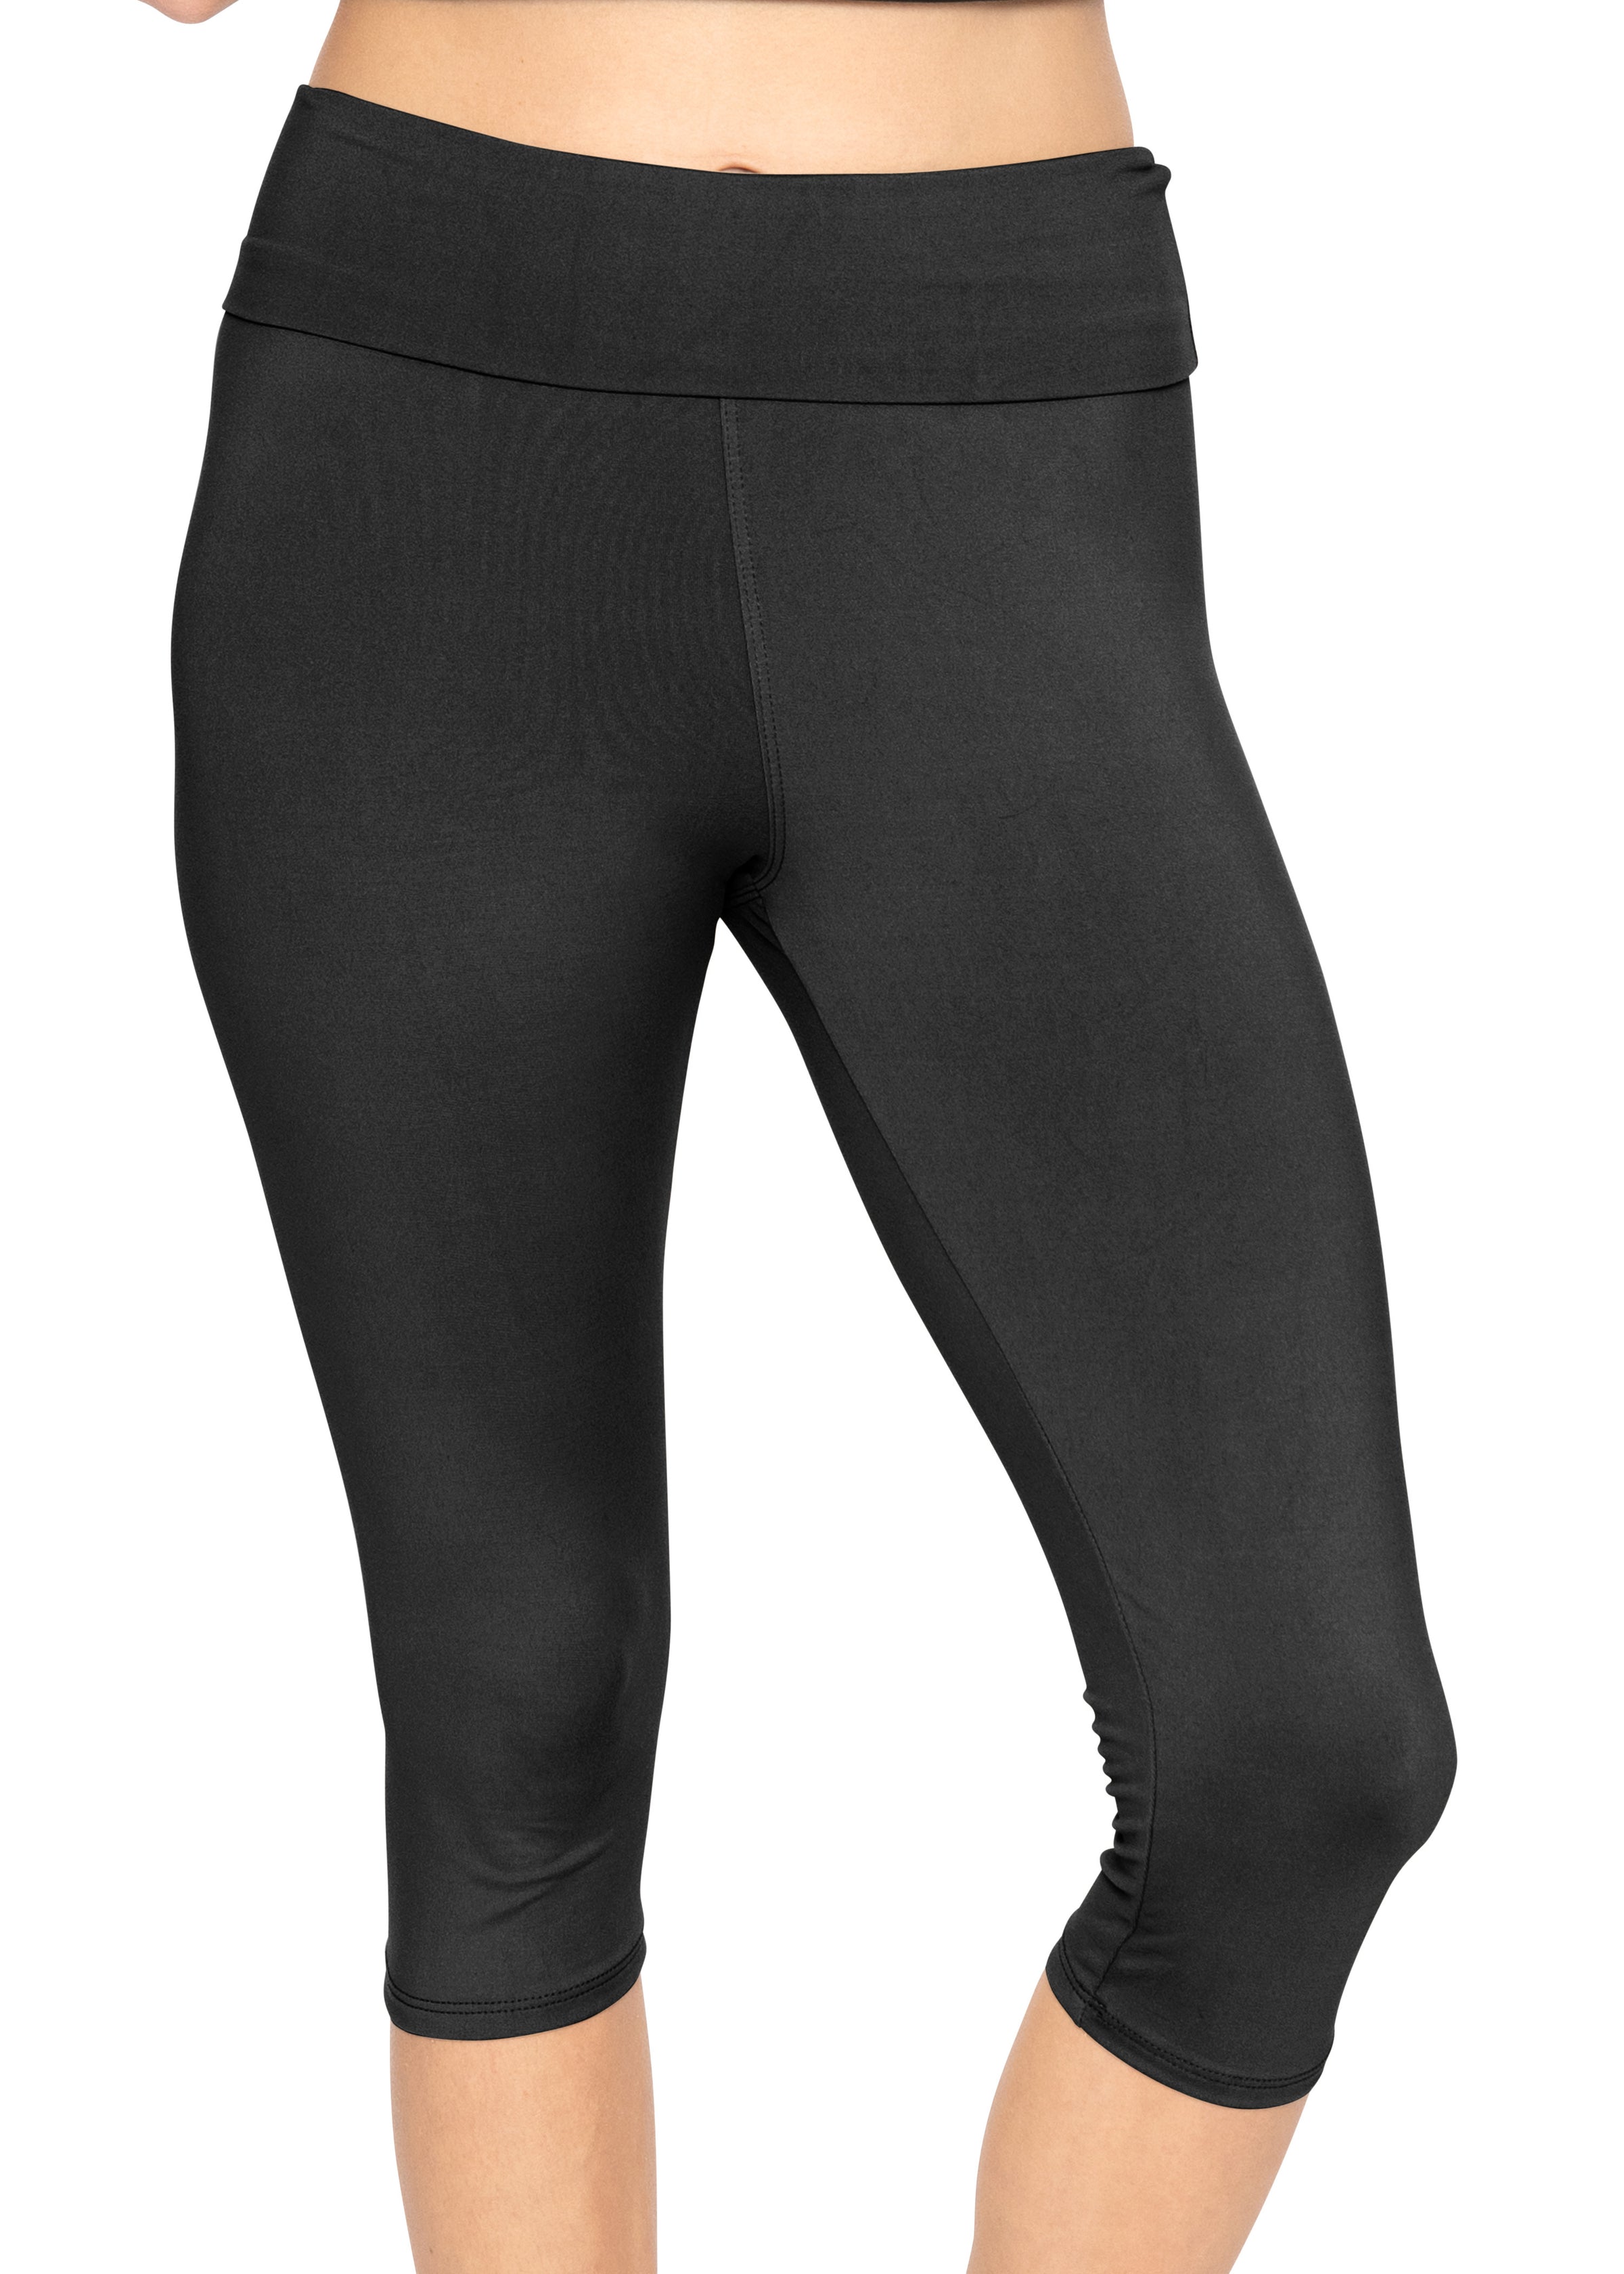 Pixie|Capri|Leggings|Biowashed Cotton Stretch Fit Capri Leggings Combo Pack  of 3 for Women/Girls (Black, Pink and Dark Brown) - Free Size